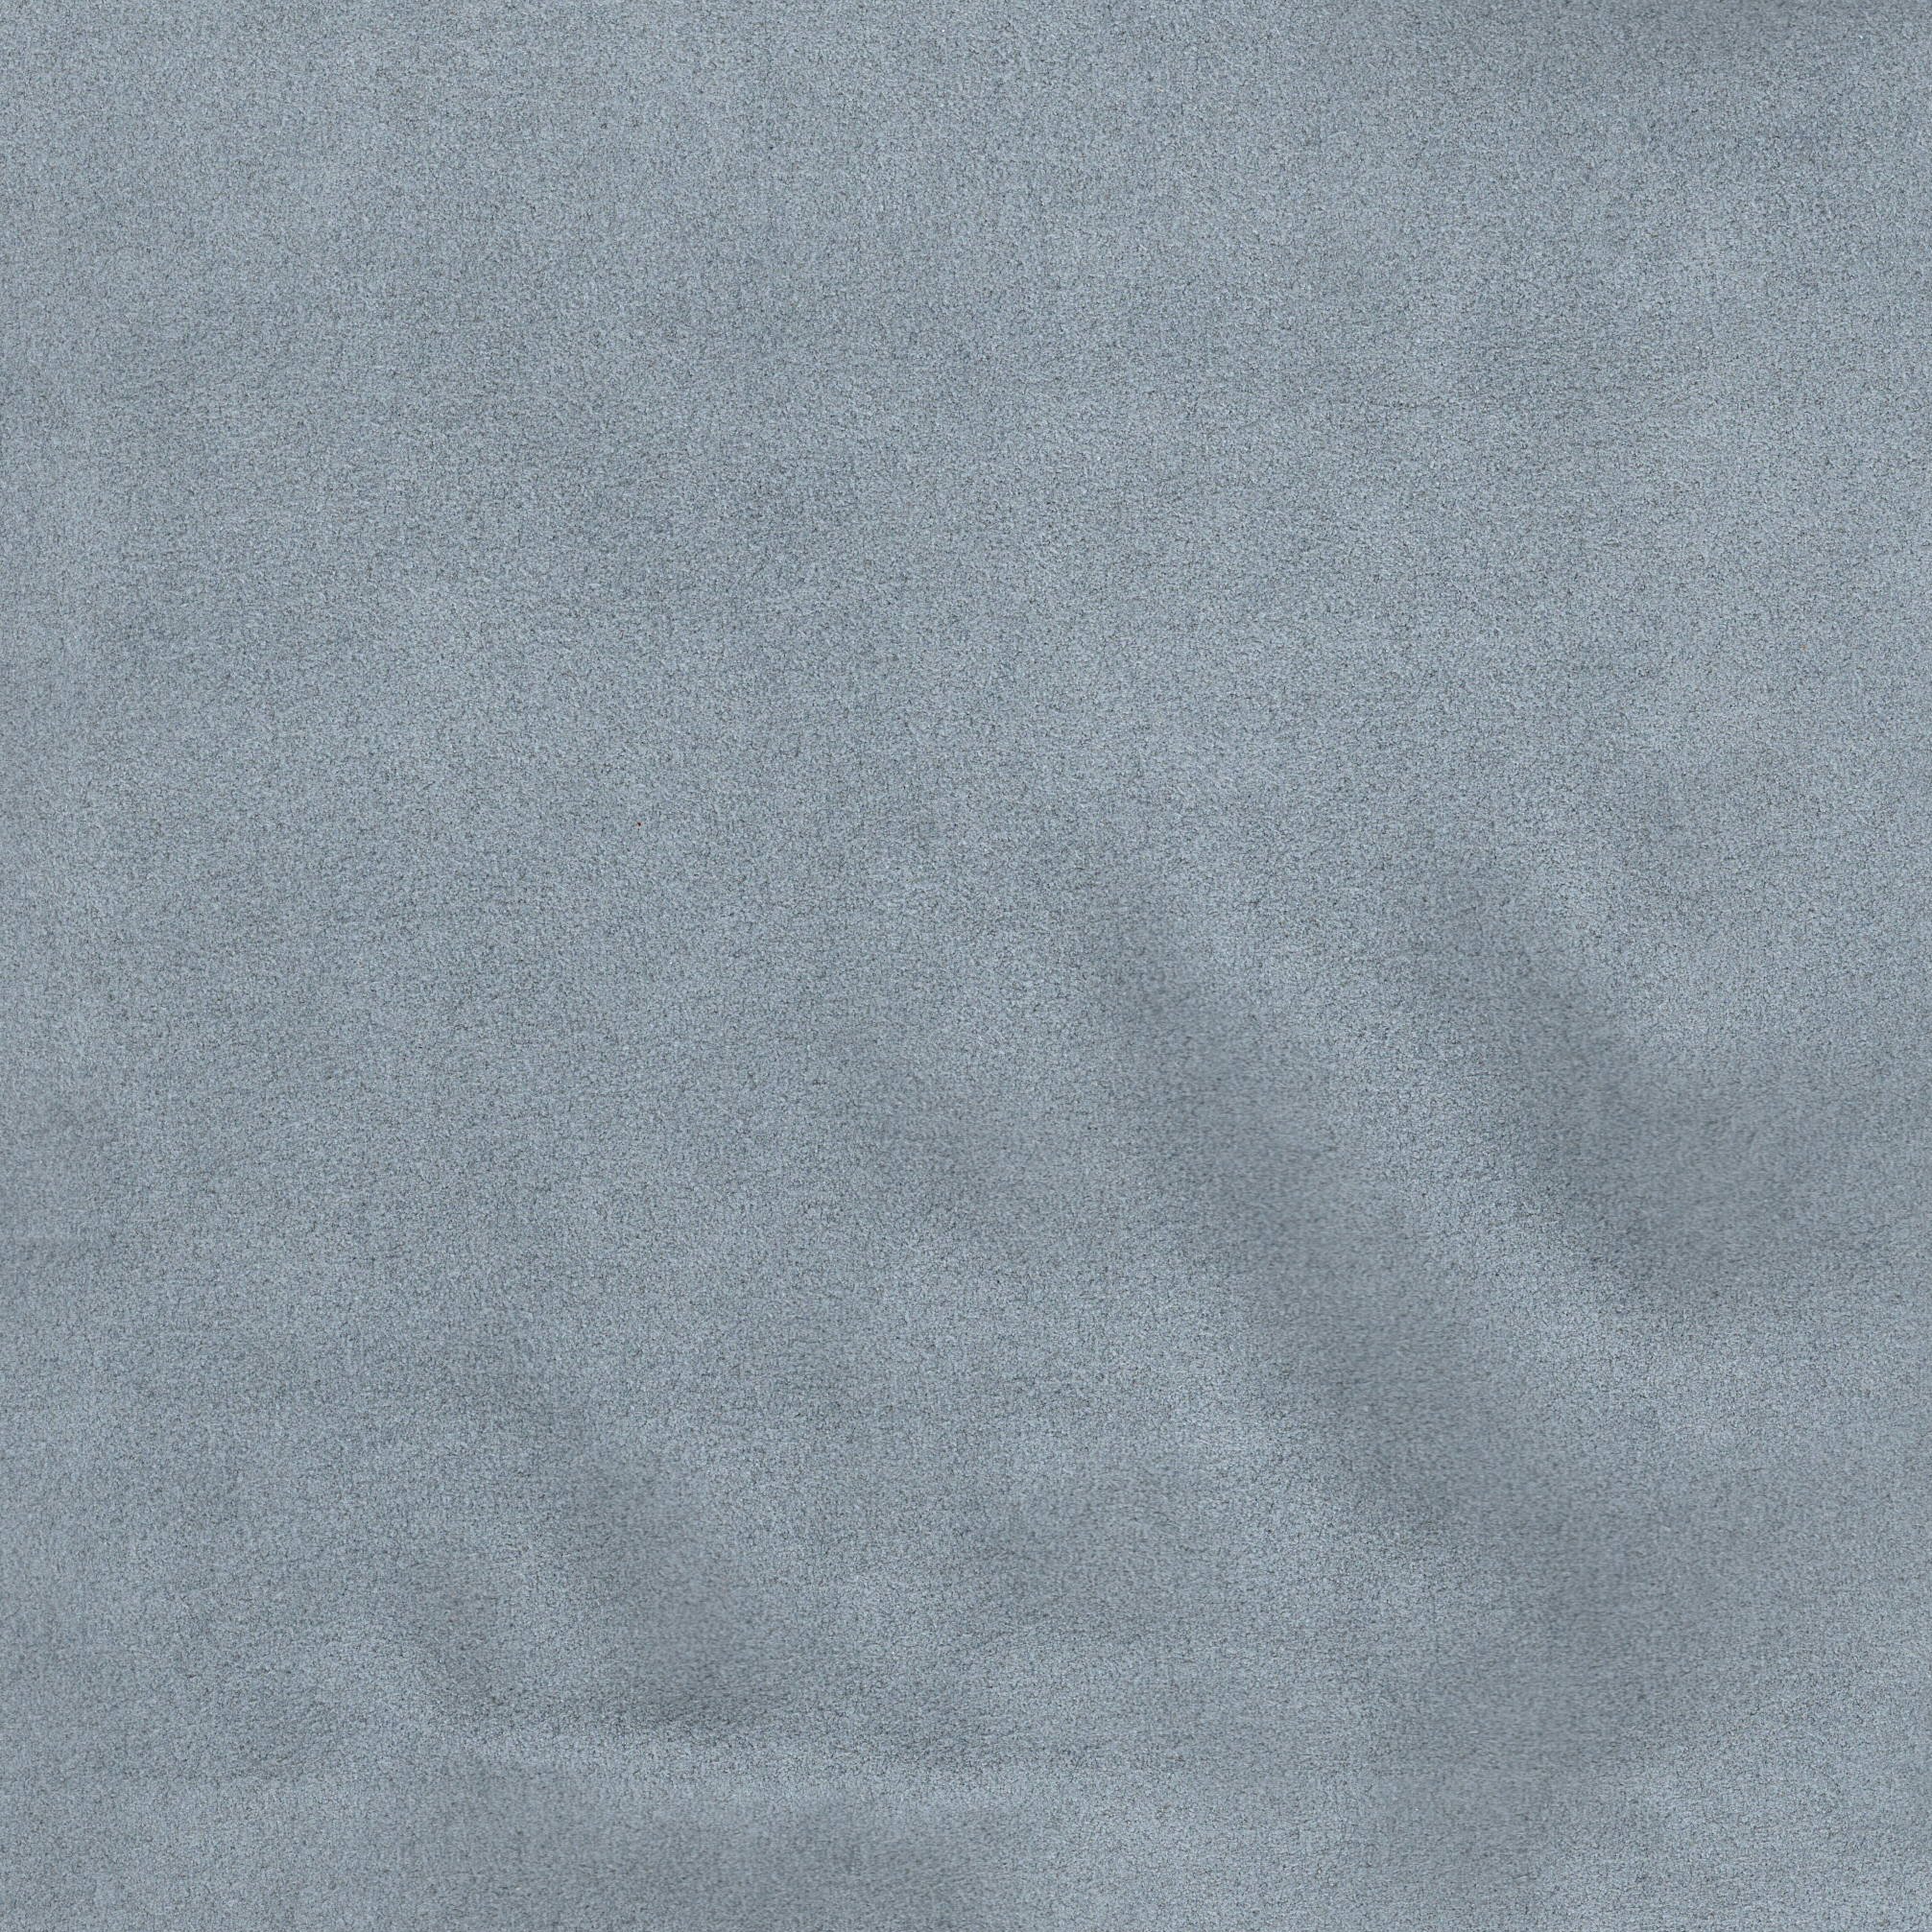 Ultrasuede - 5970 French Grey (Copy)